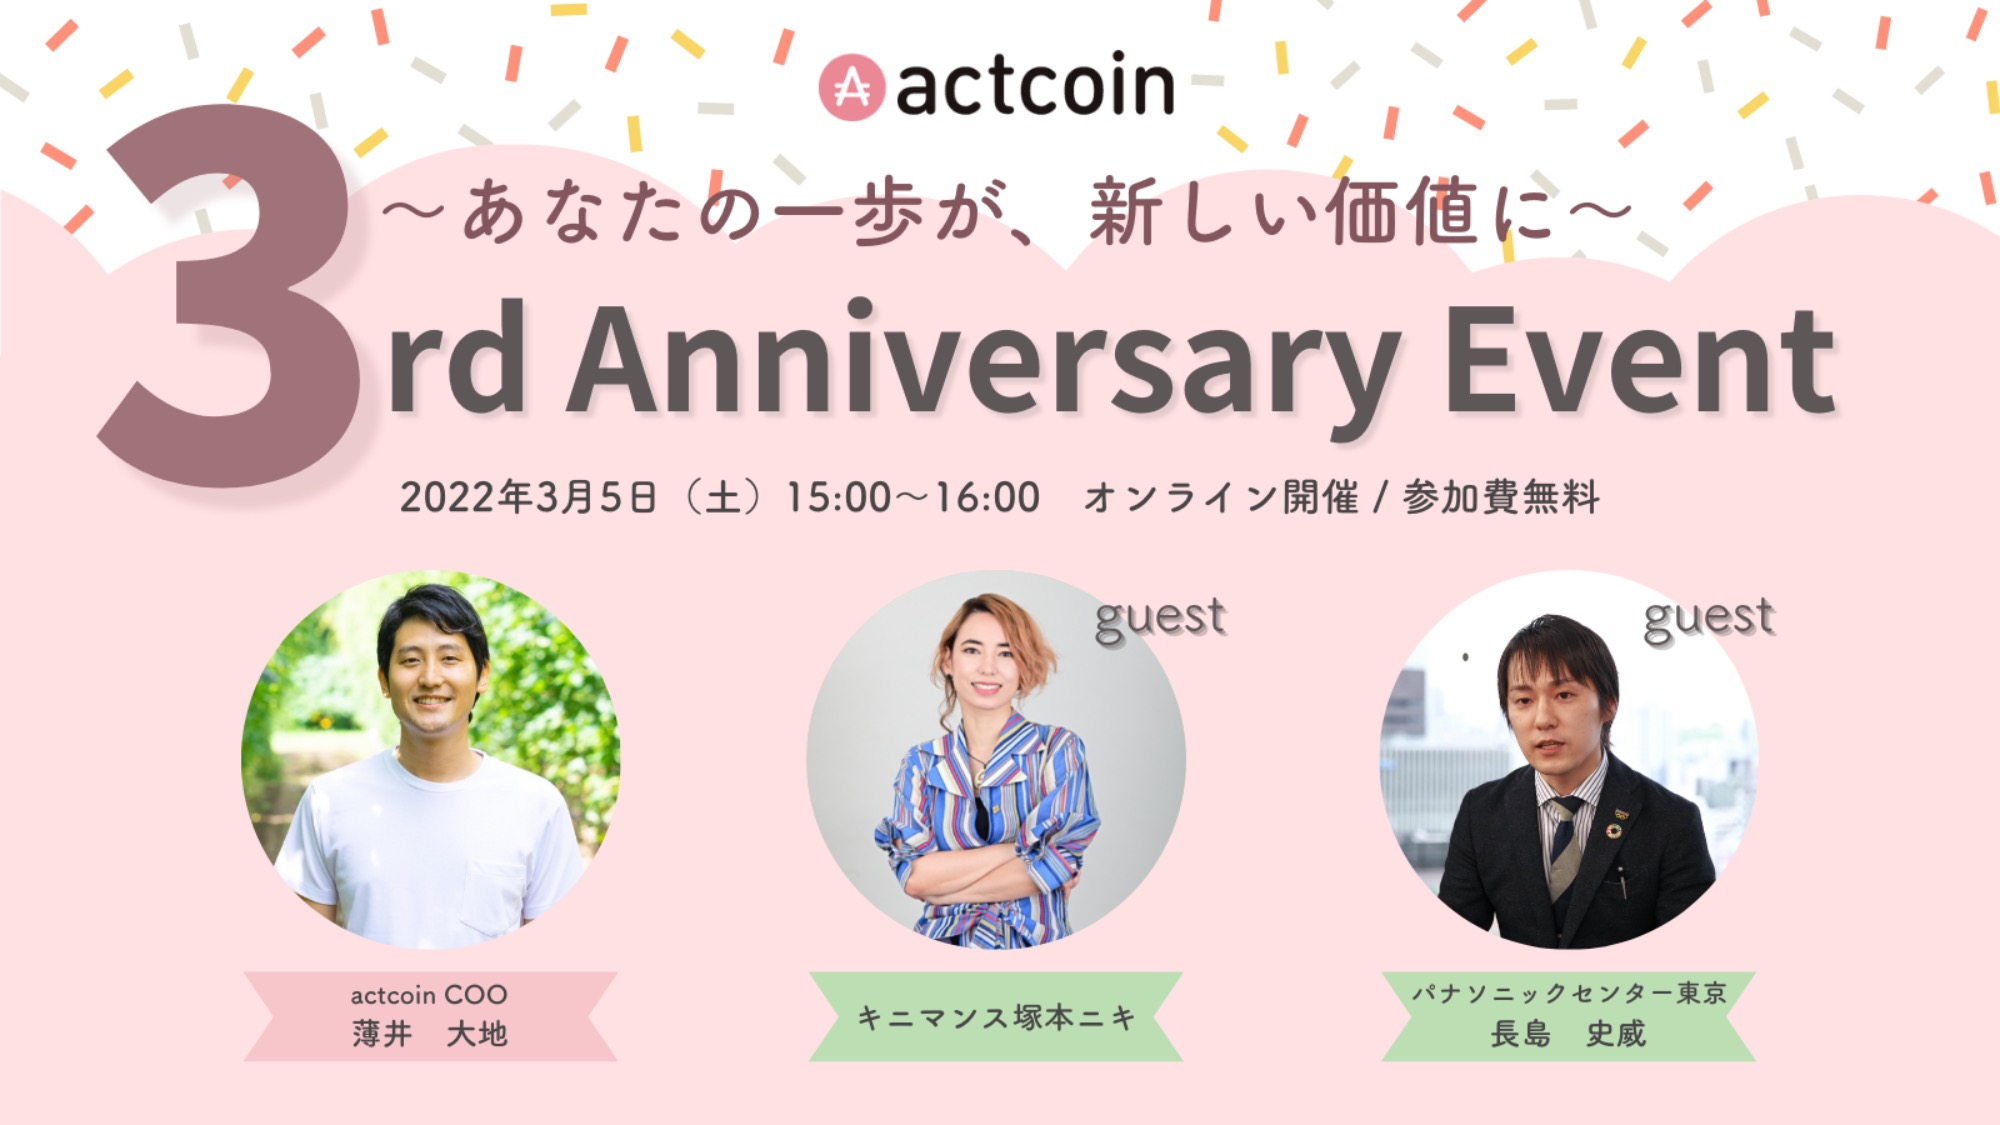 actcoin 3rd Anniversary Event 〜あなたの一歩が新しい価値に〜